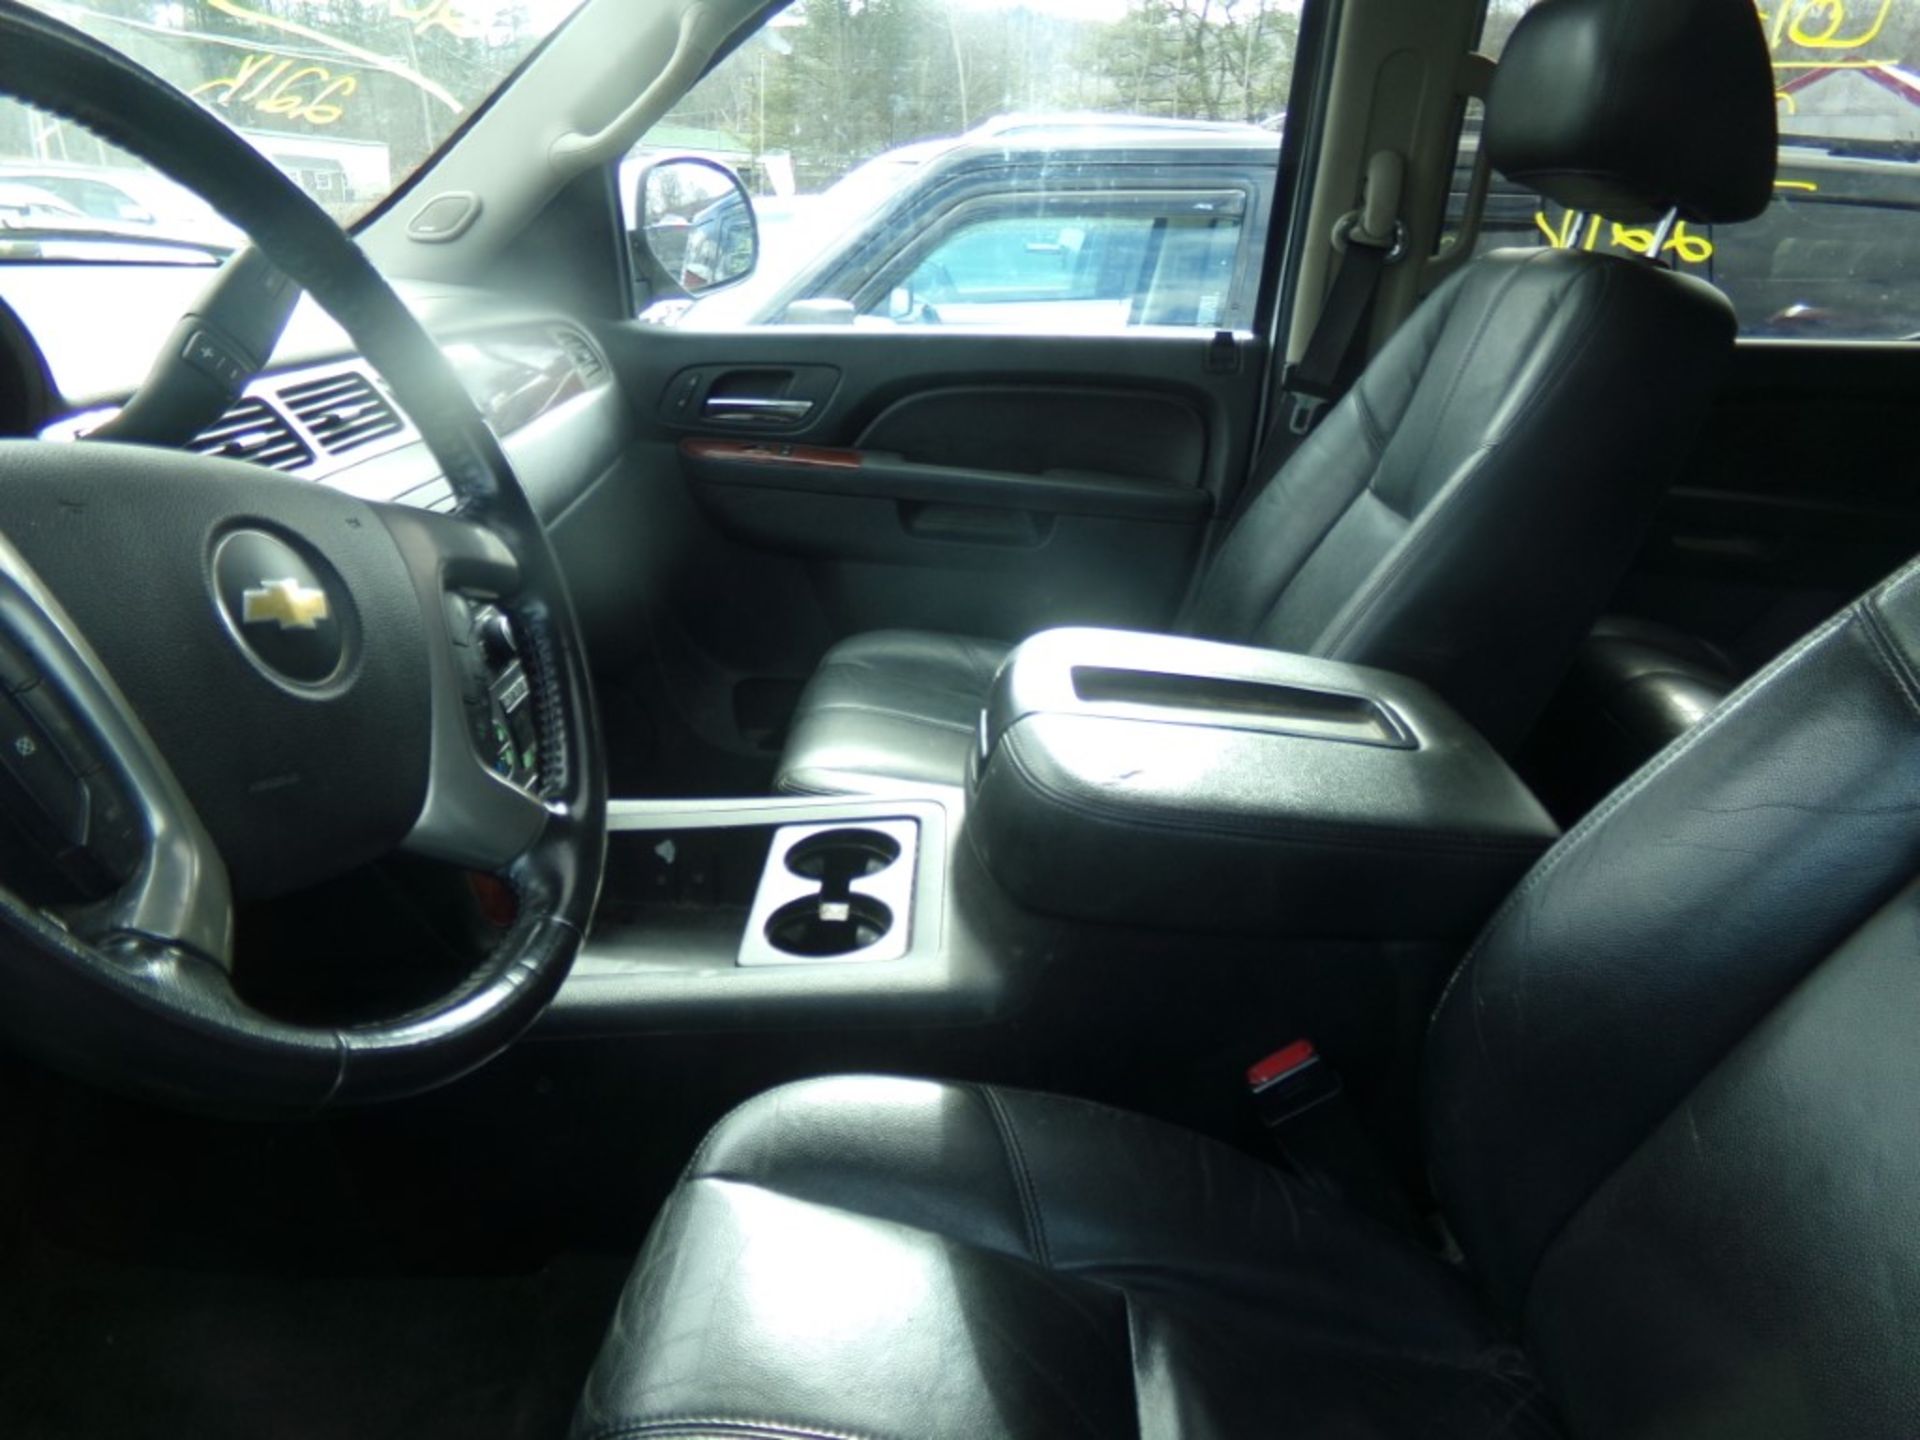 2013 Chevrolet Tahoe LT 4X4, Leather, Sunroof, White, 221,664 Miles, VIN#1GNSKBE01DR317639 - OPEN TO - Image 5 of 13